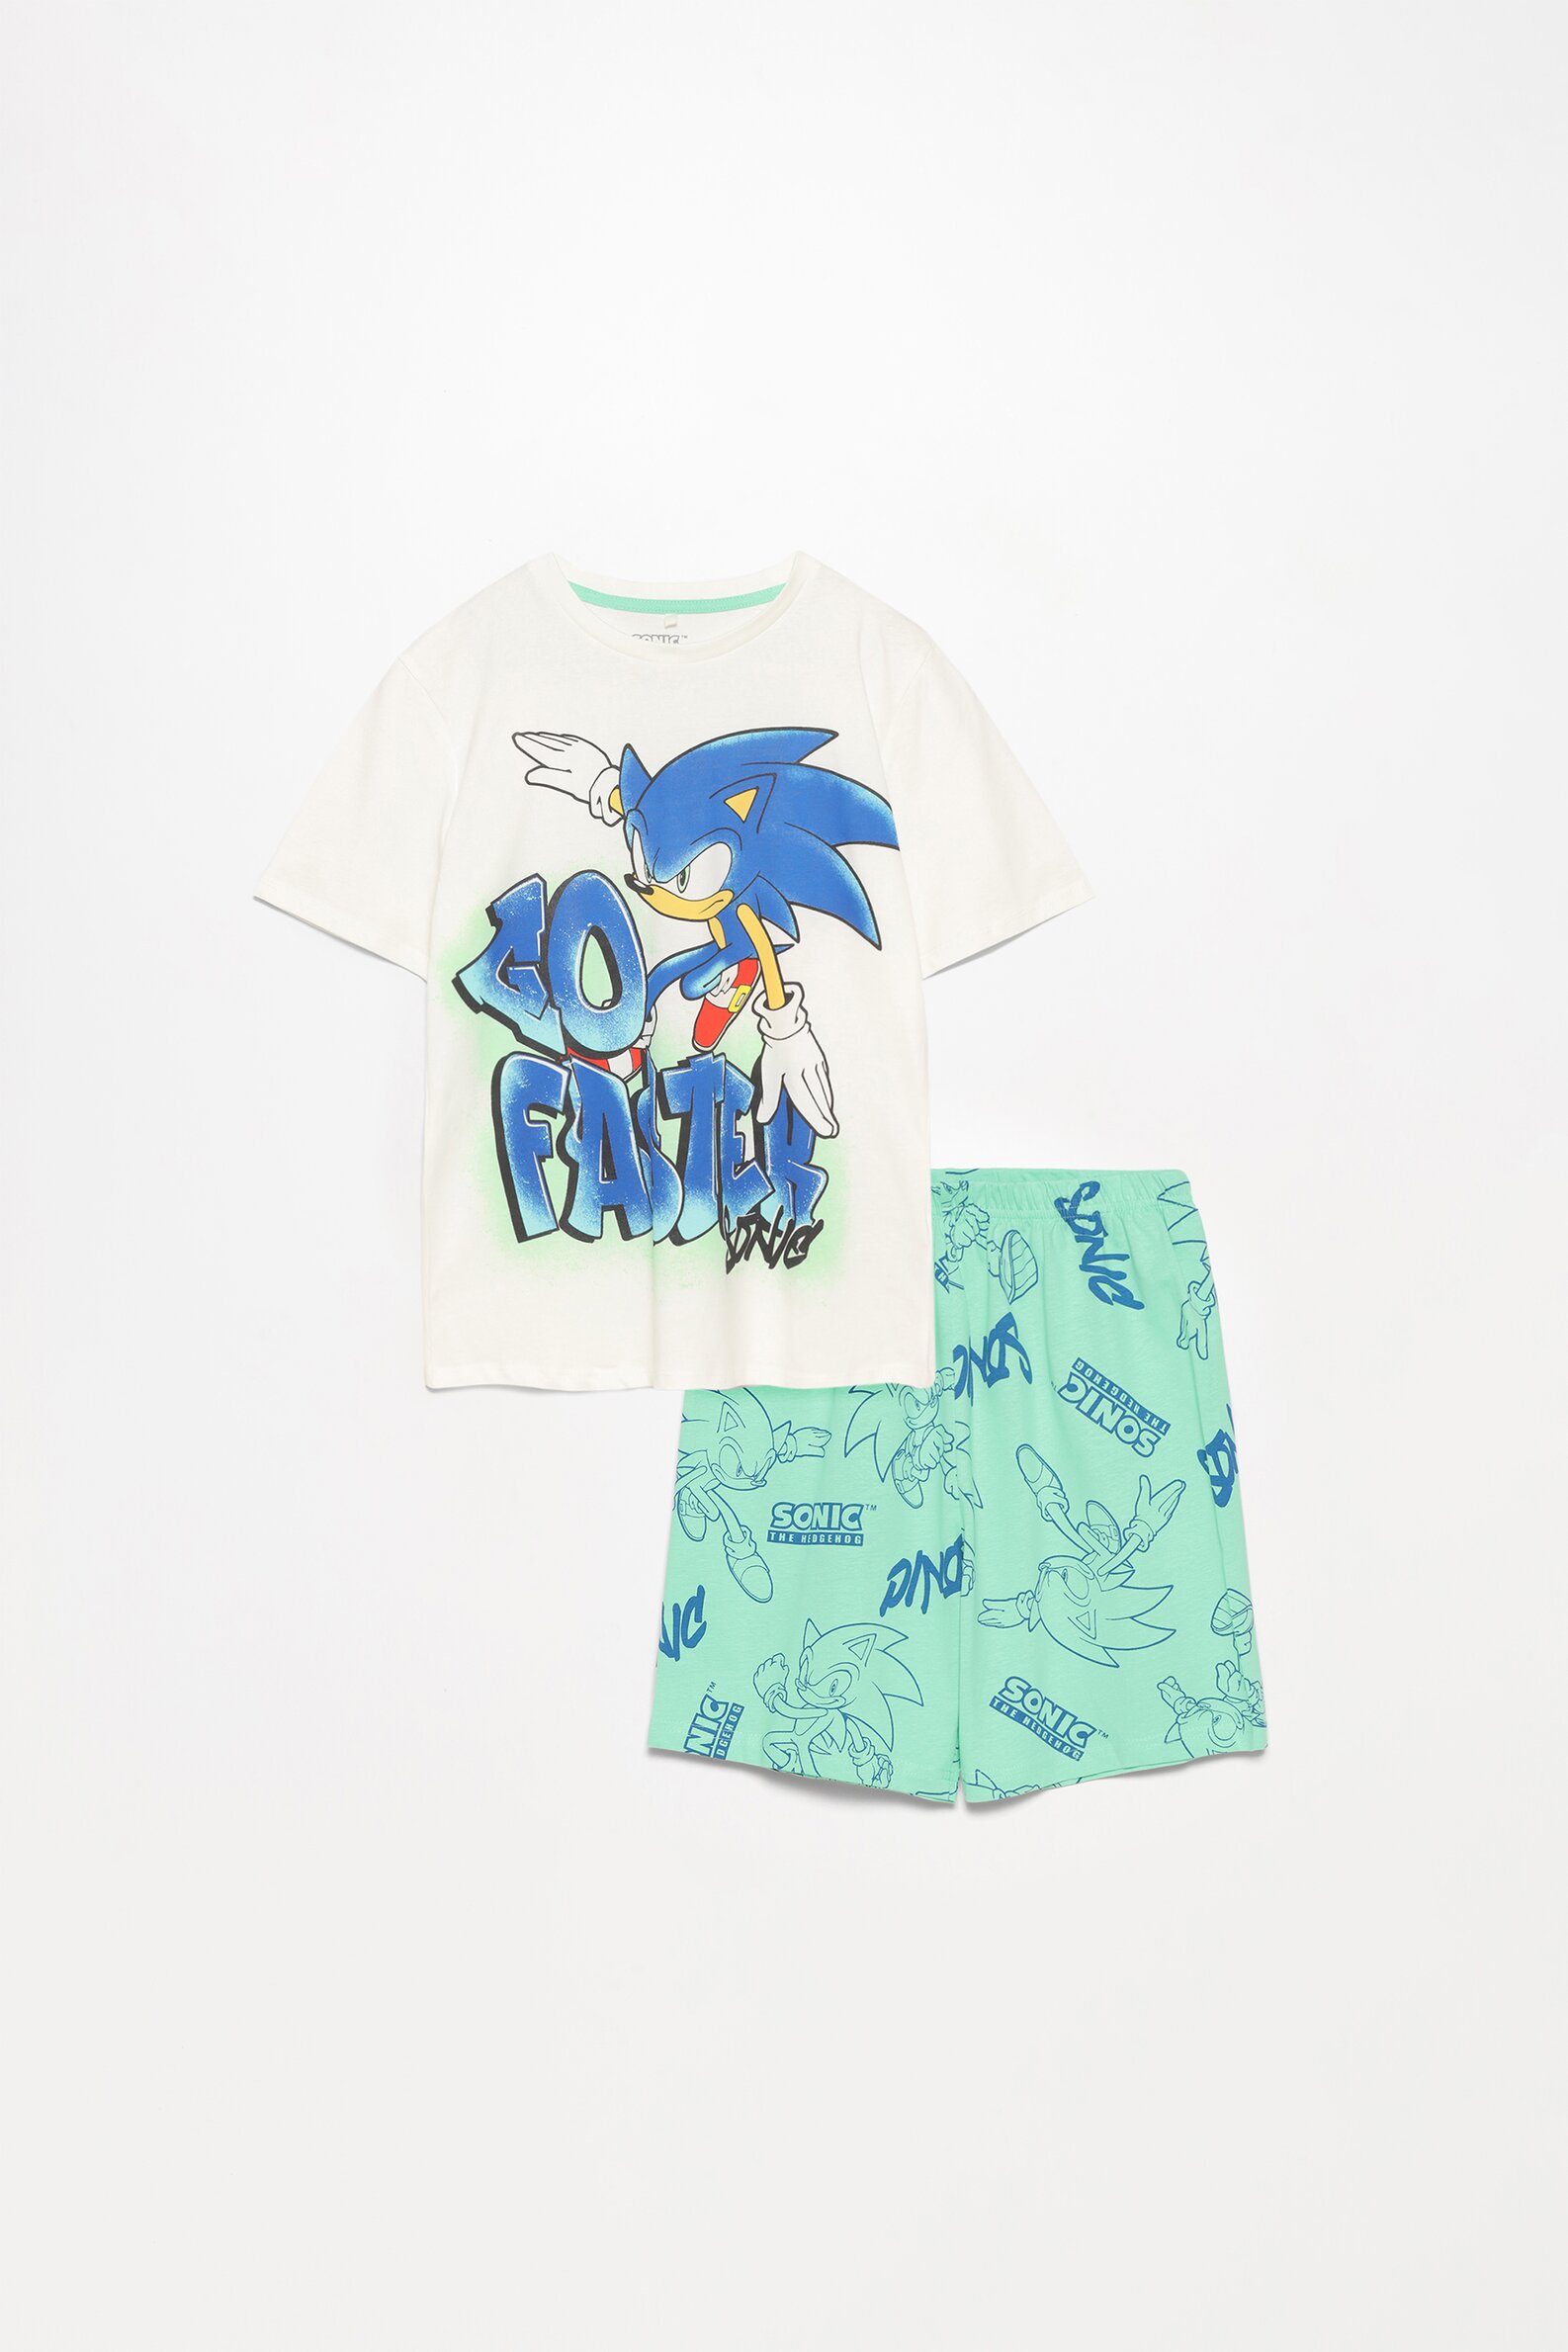 Lot of 5 Sonic the Hedgehog Girls Underwear 100% Cotton Set - Size 4